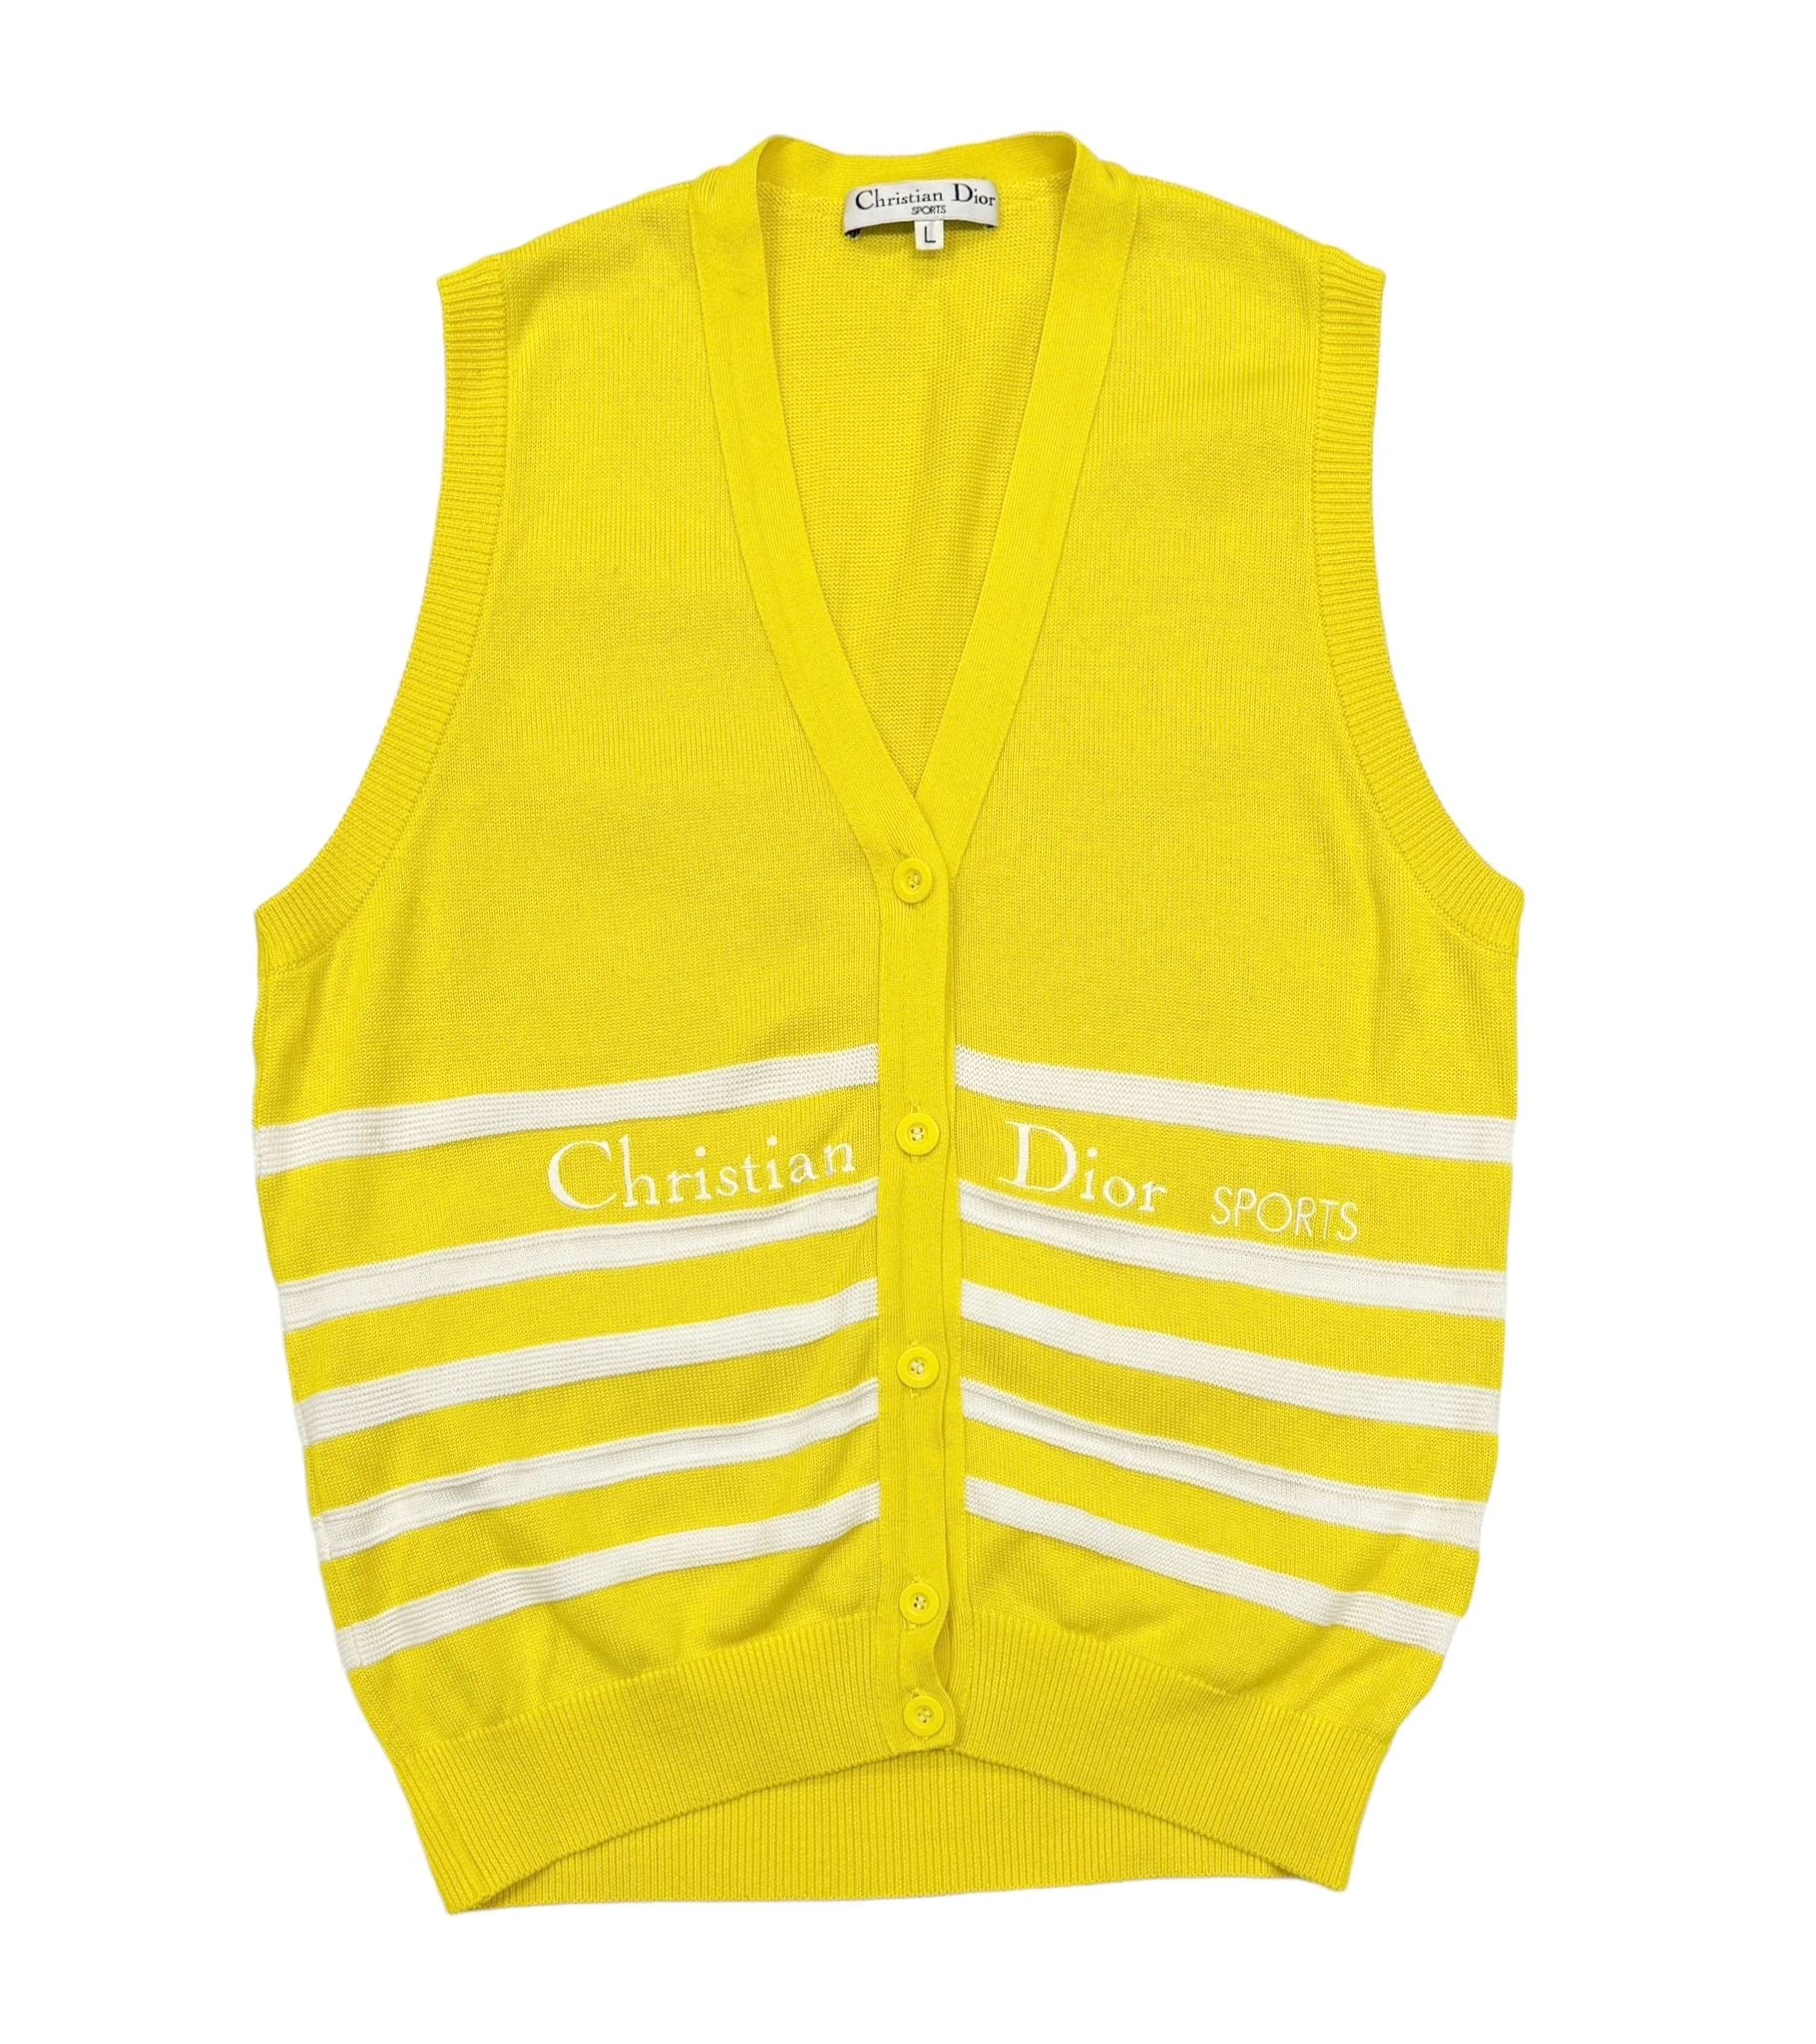 Dior Sports Yellow Button Vest